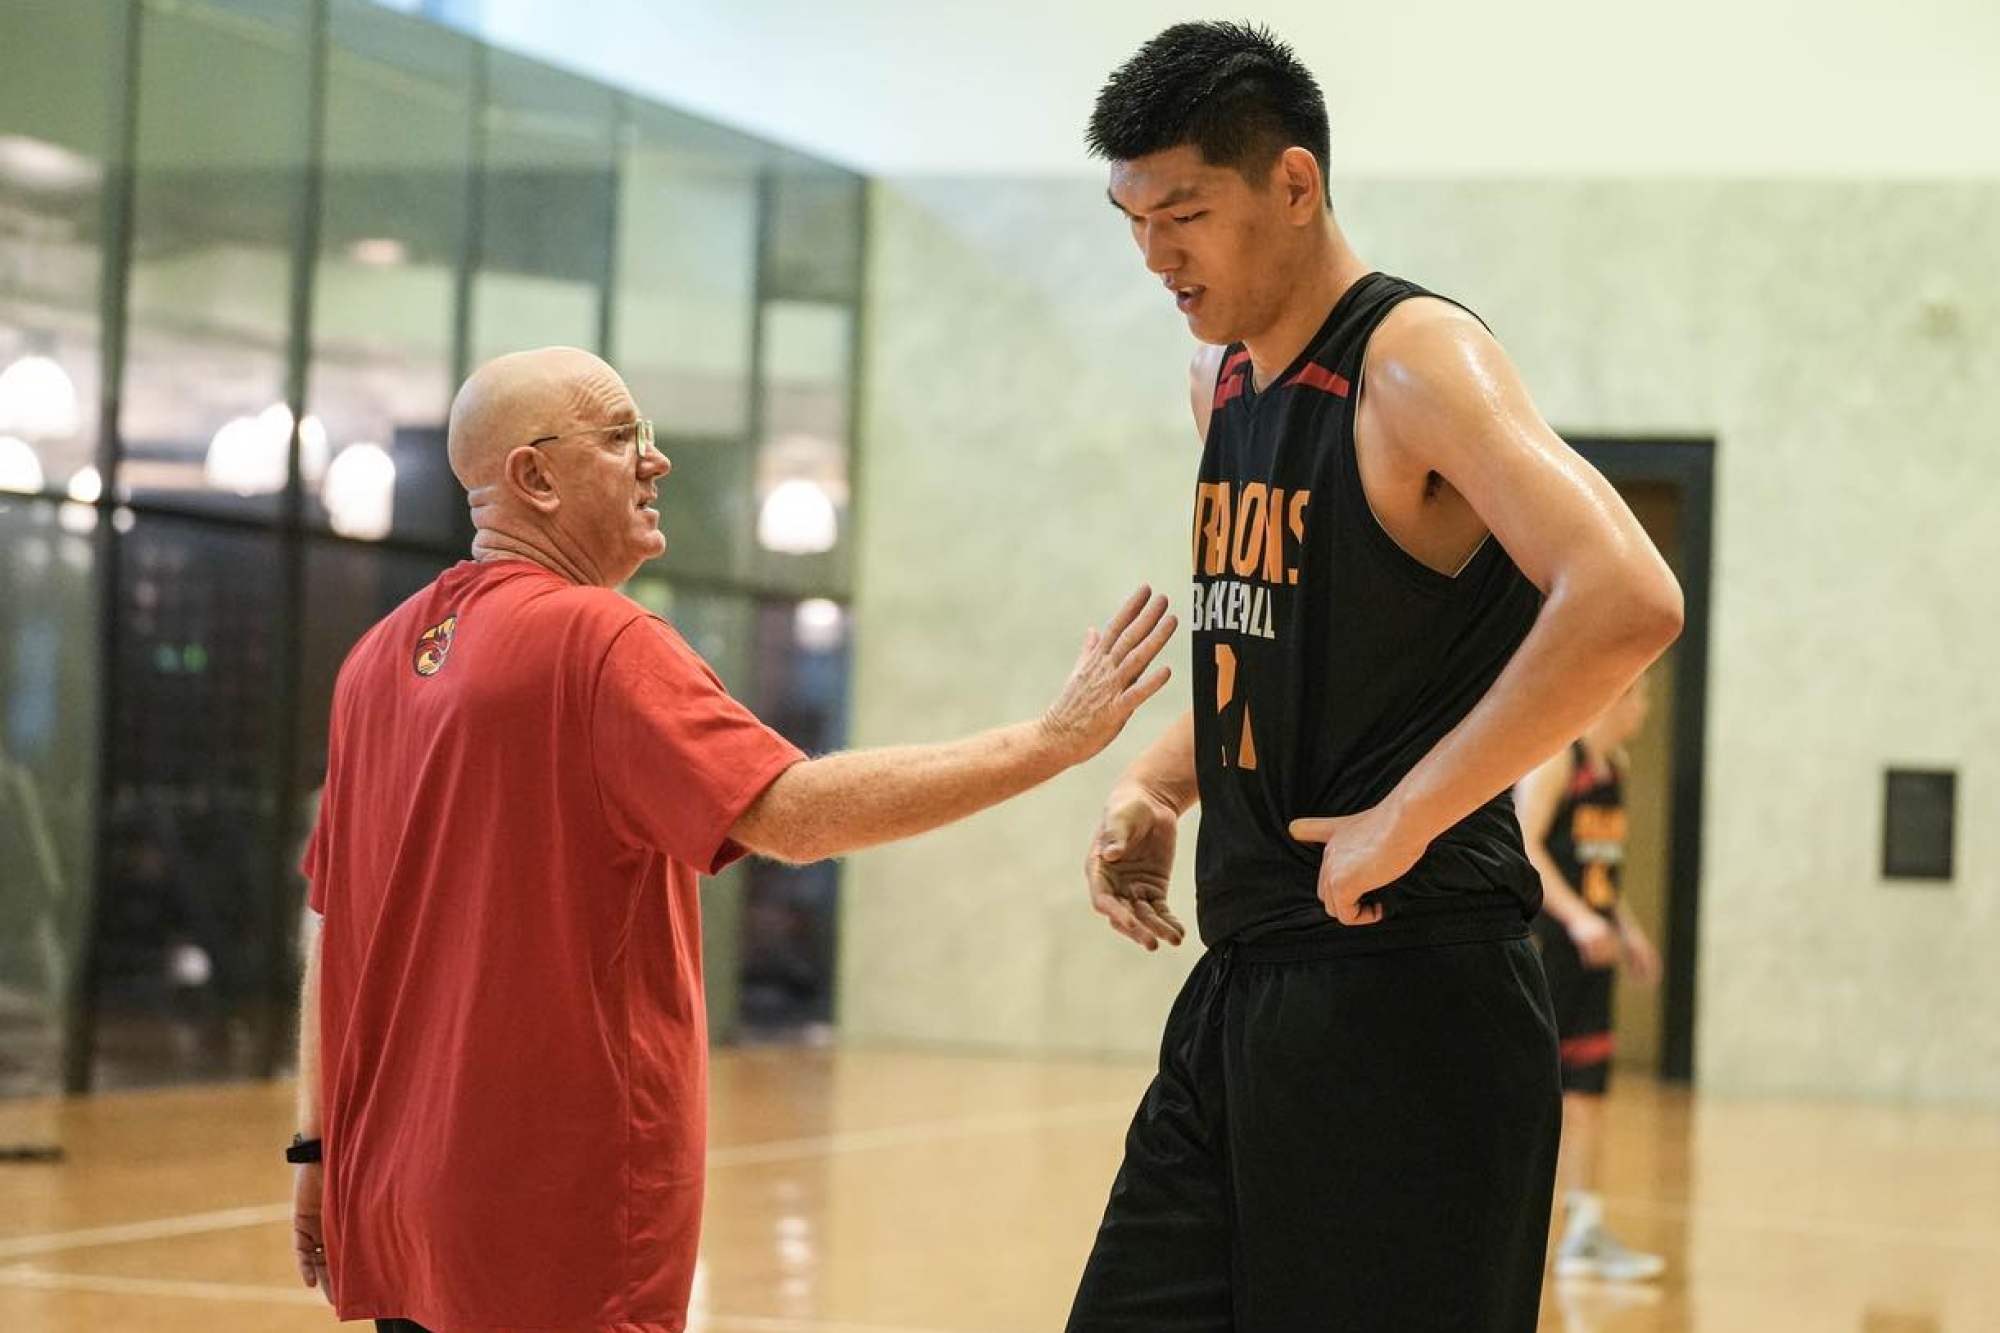 Basketball star Jeremy Lin named LingoAce ambassador